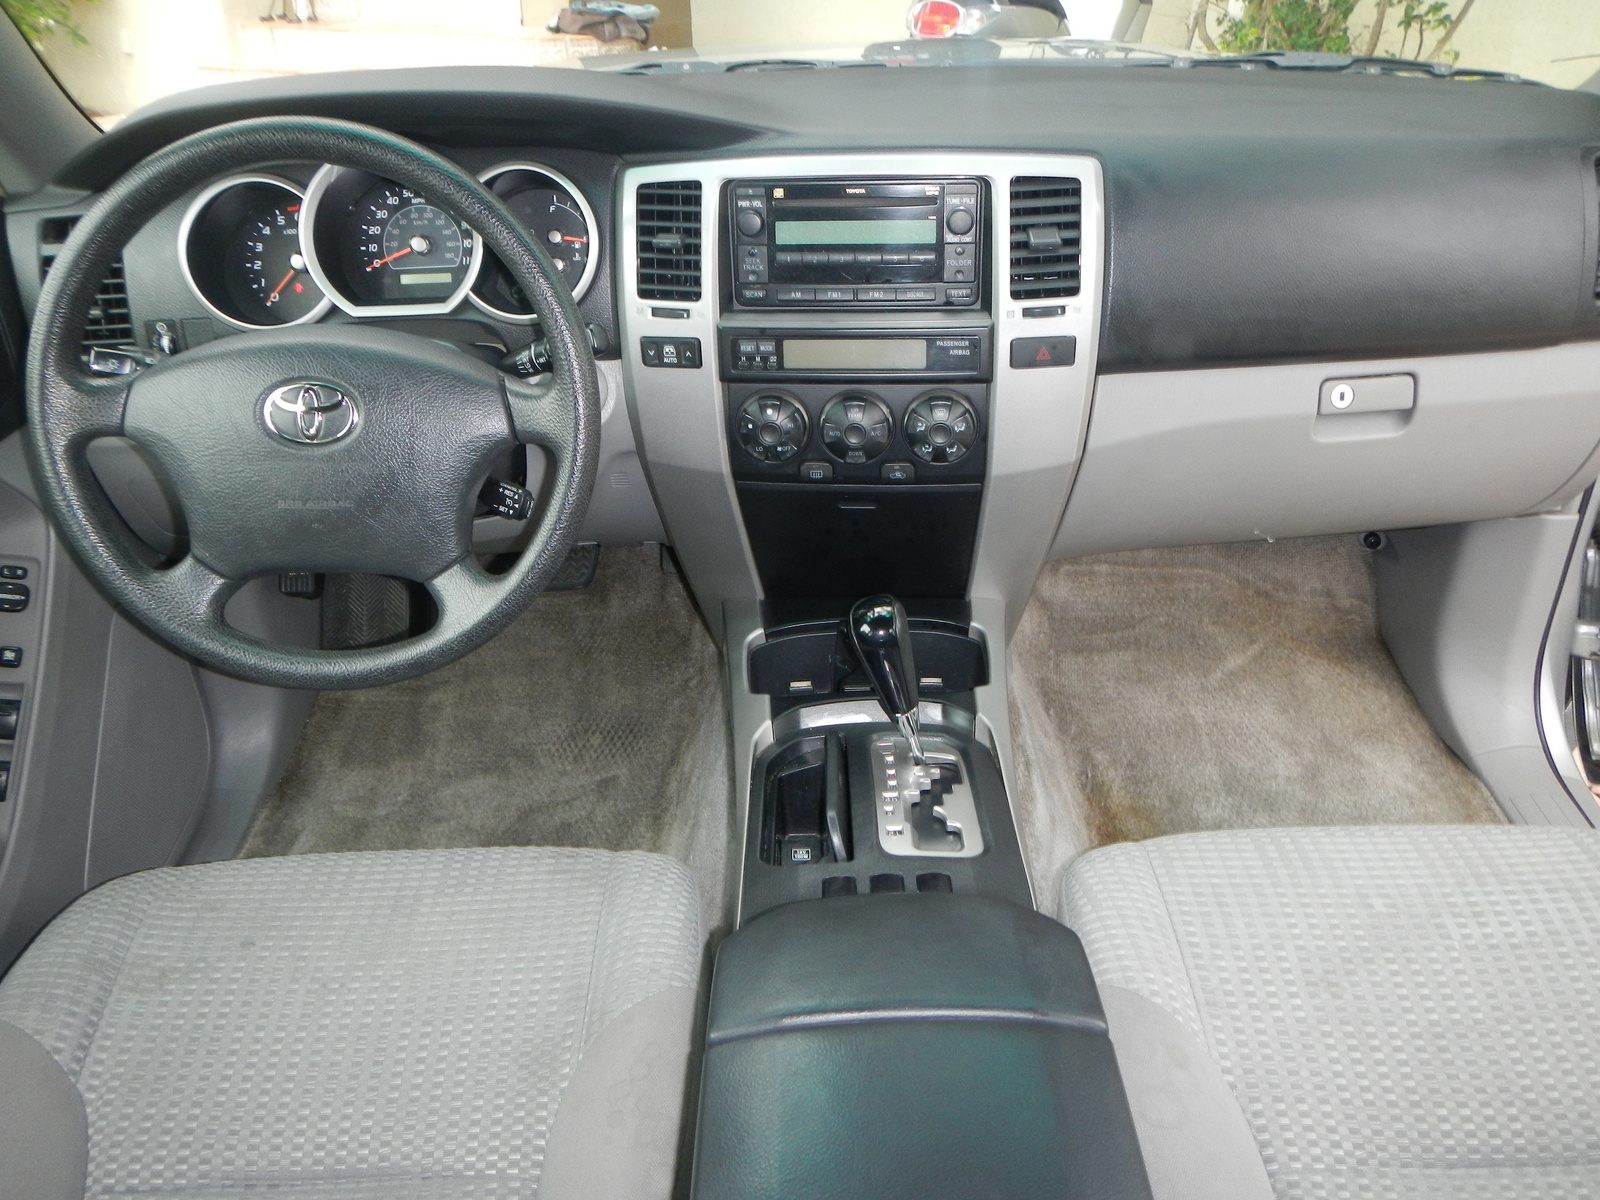 2006 Toyota 4runner interior parts